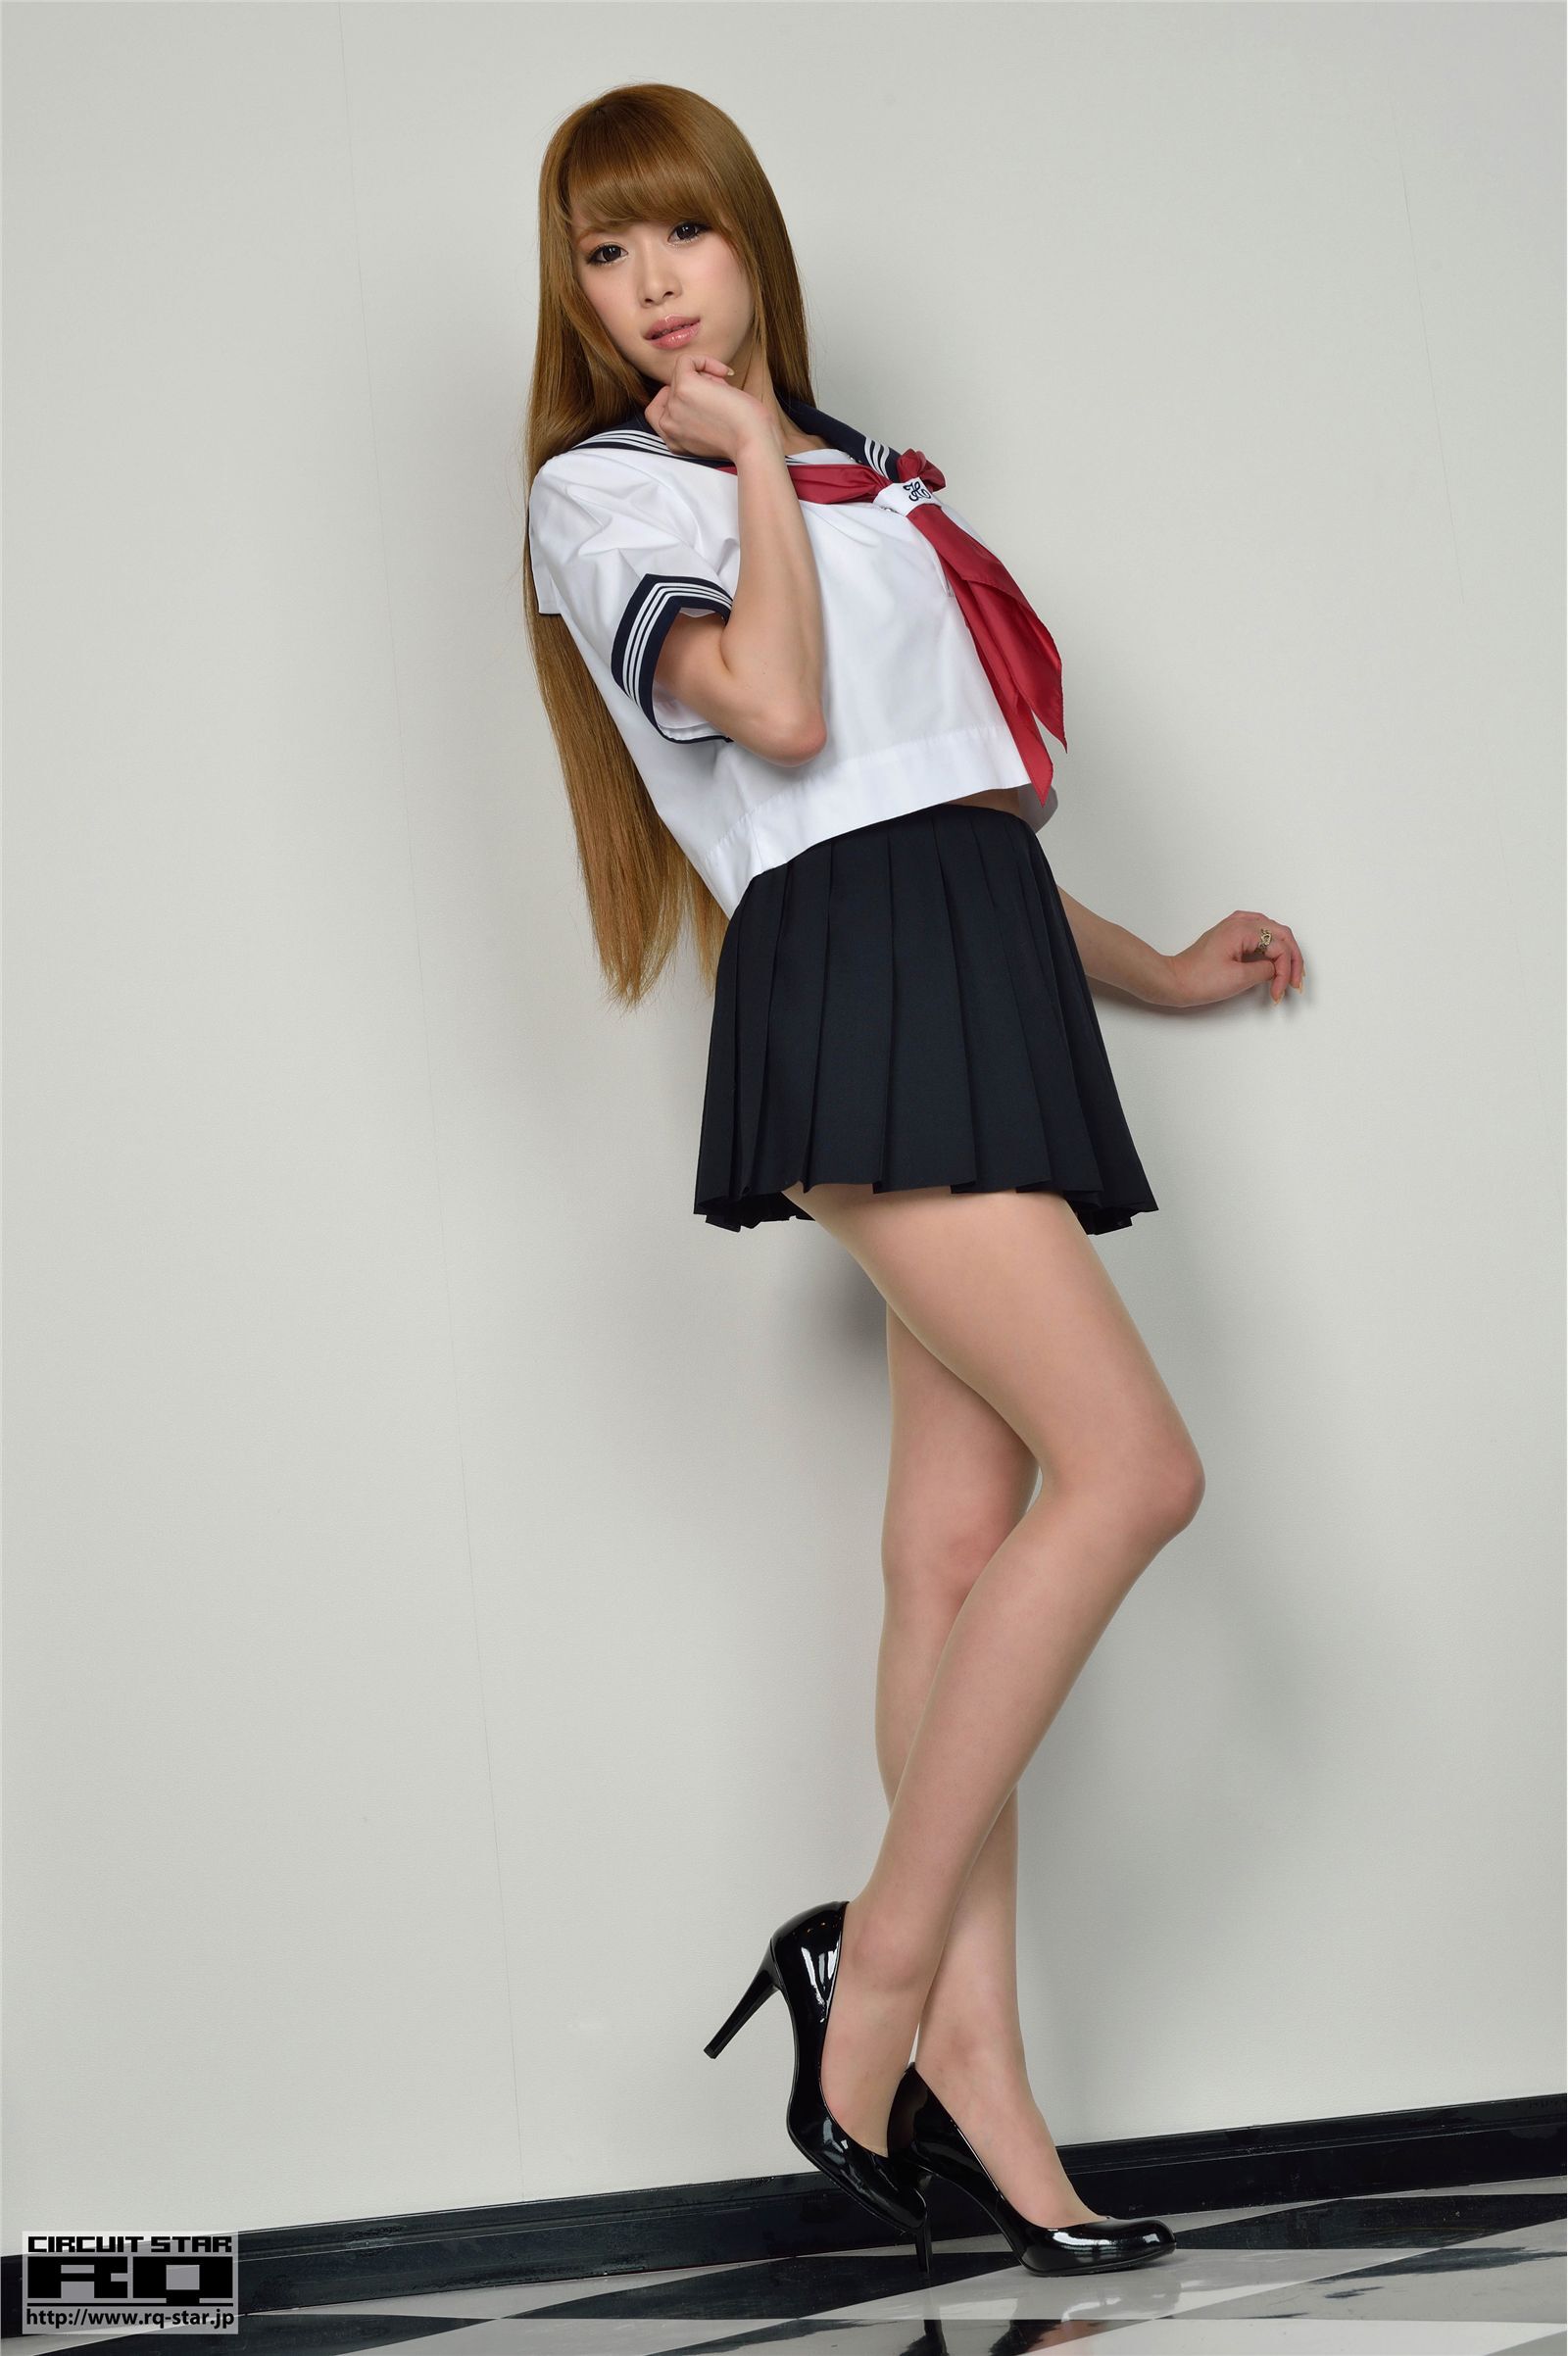 Japanese beauty uniform